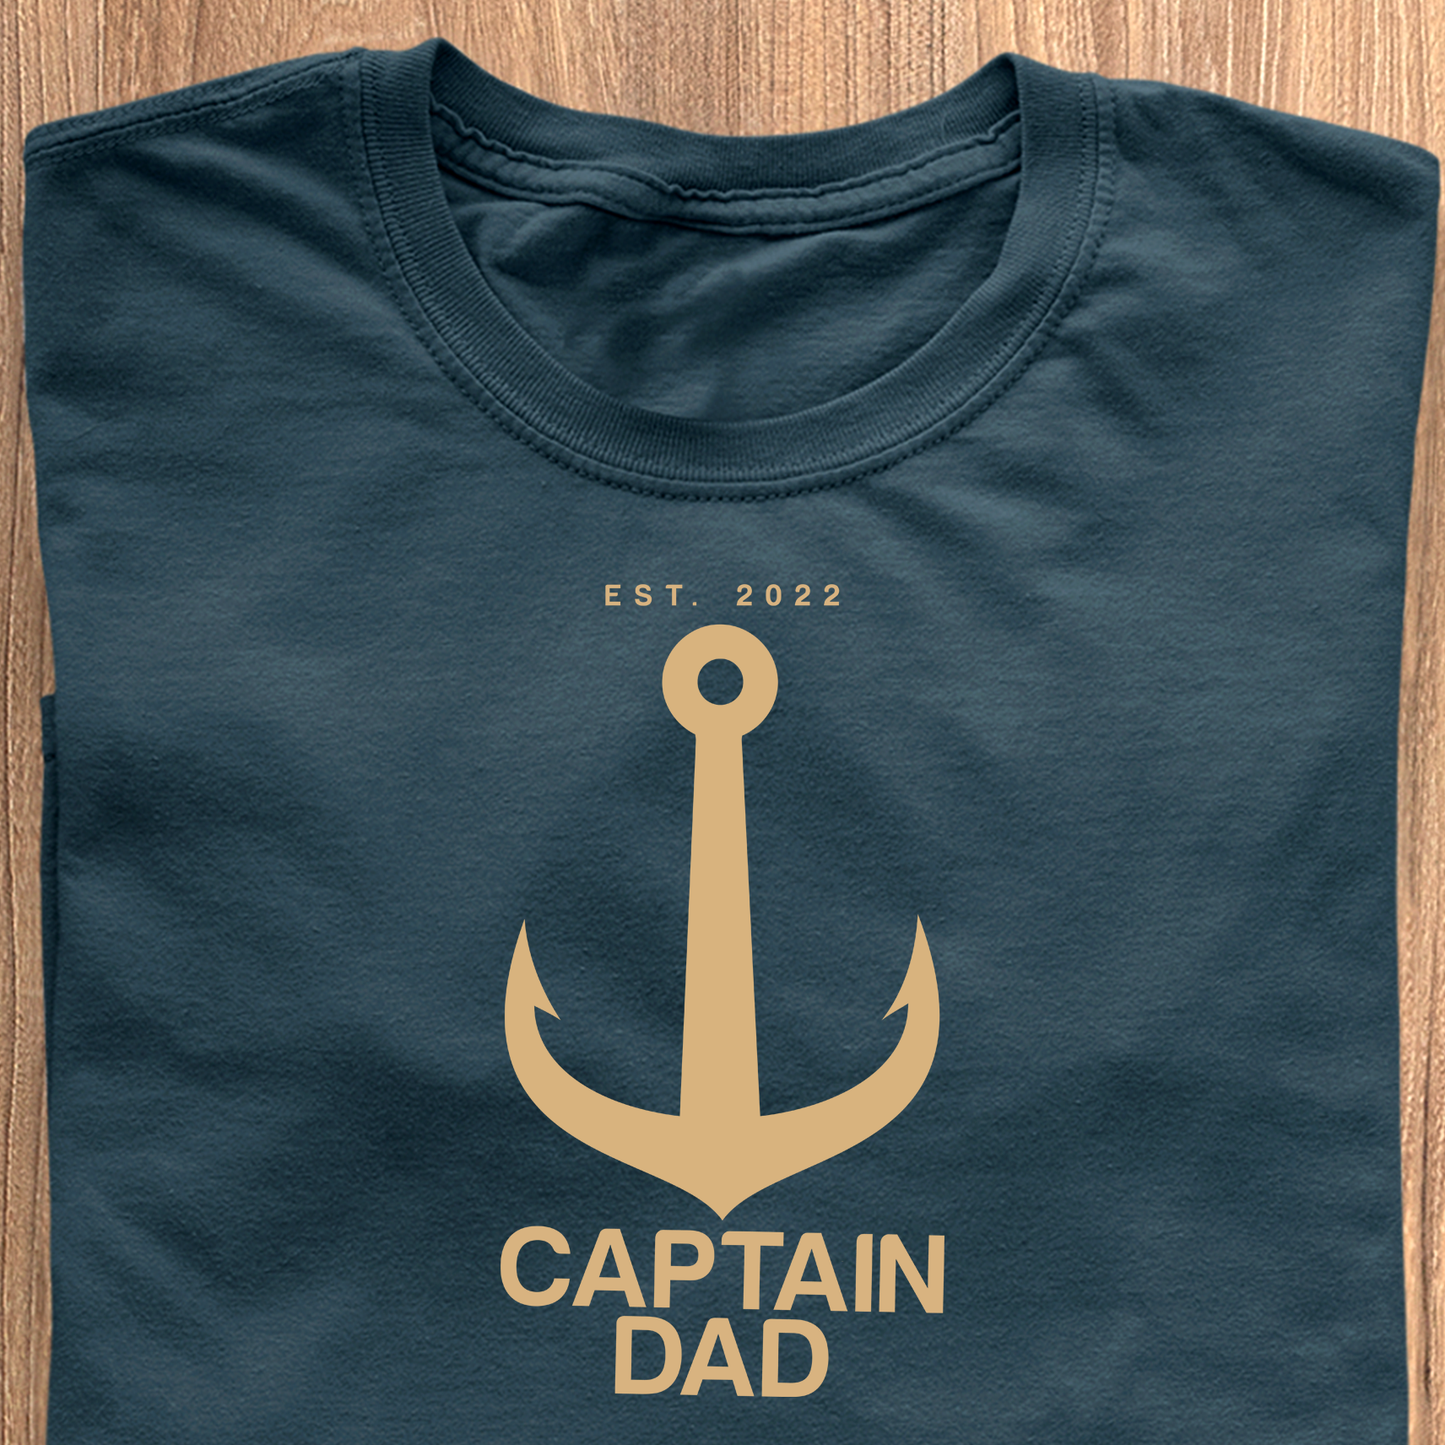 Captain Dad T-Shirt - Datum personalisierbar